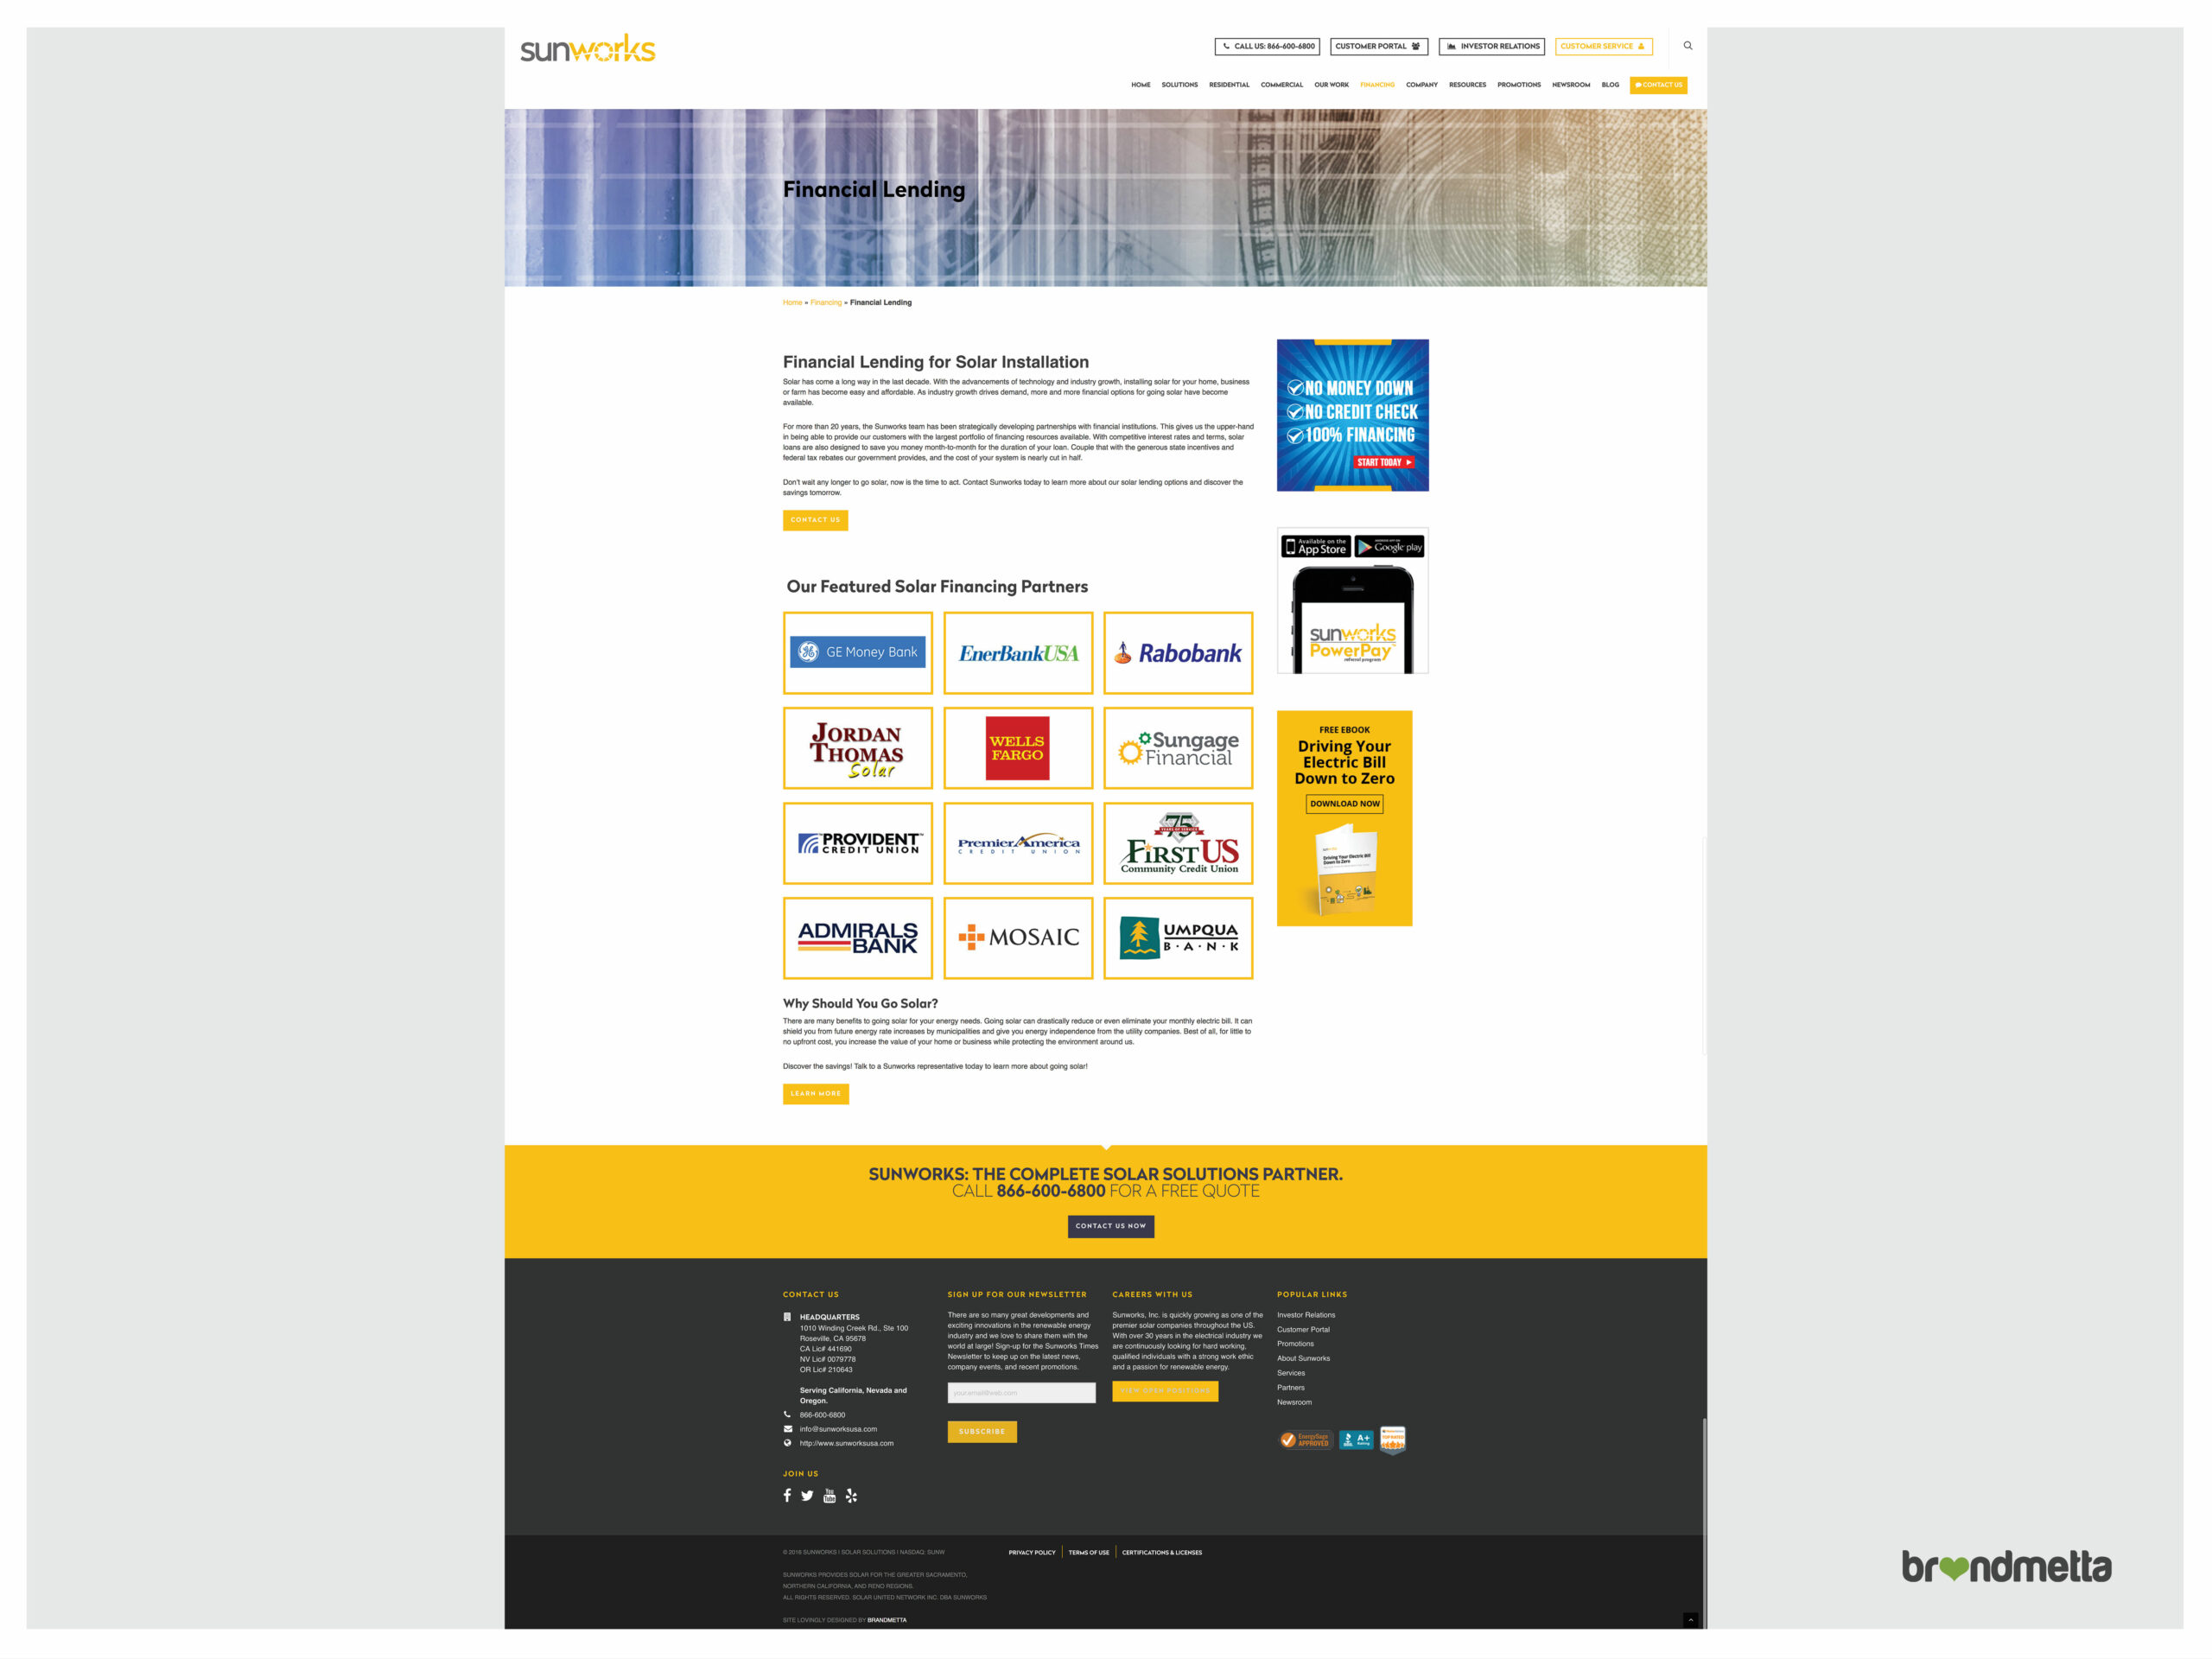 brandmetta-portfolio-website-comparisons-sunworks-4